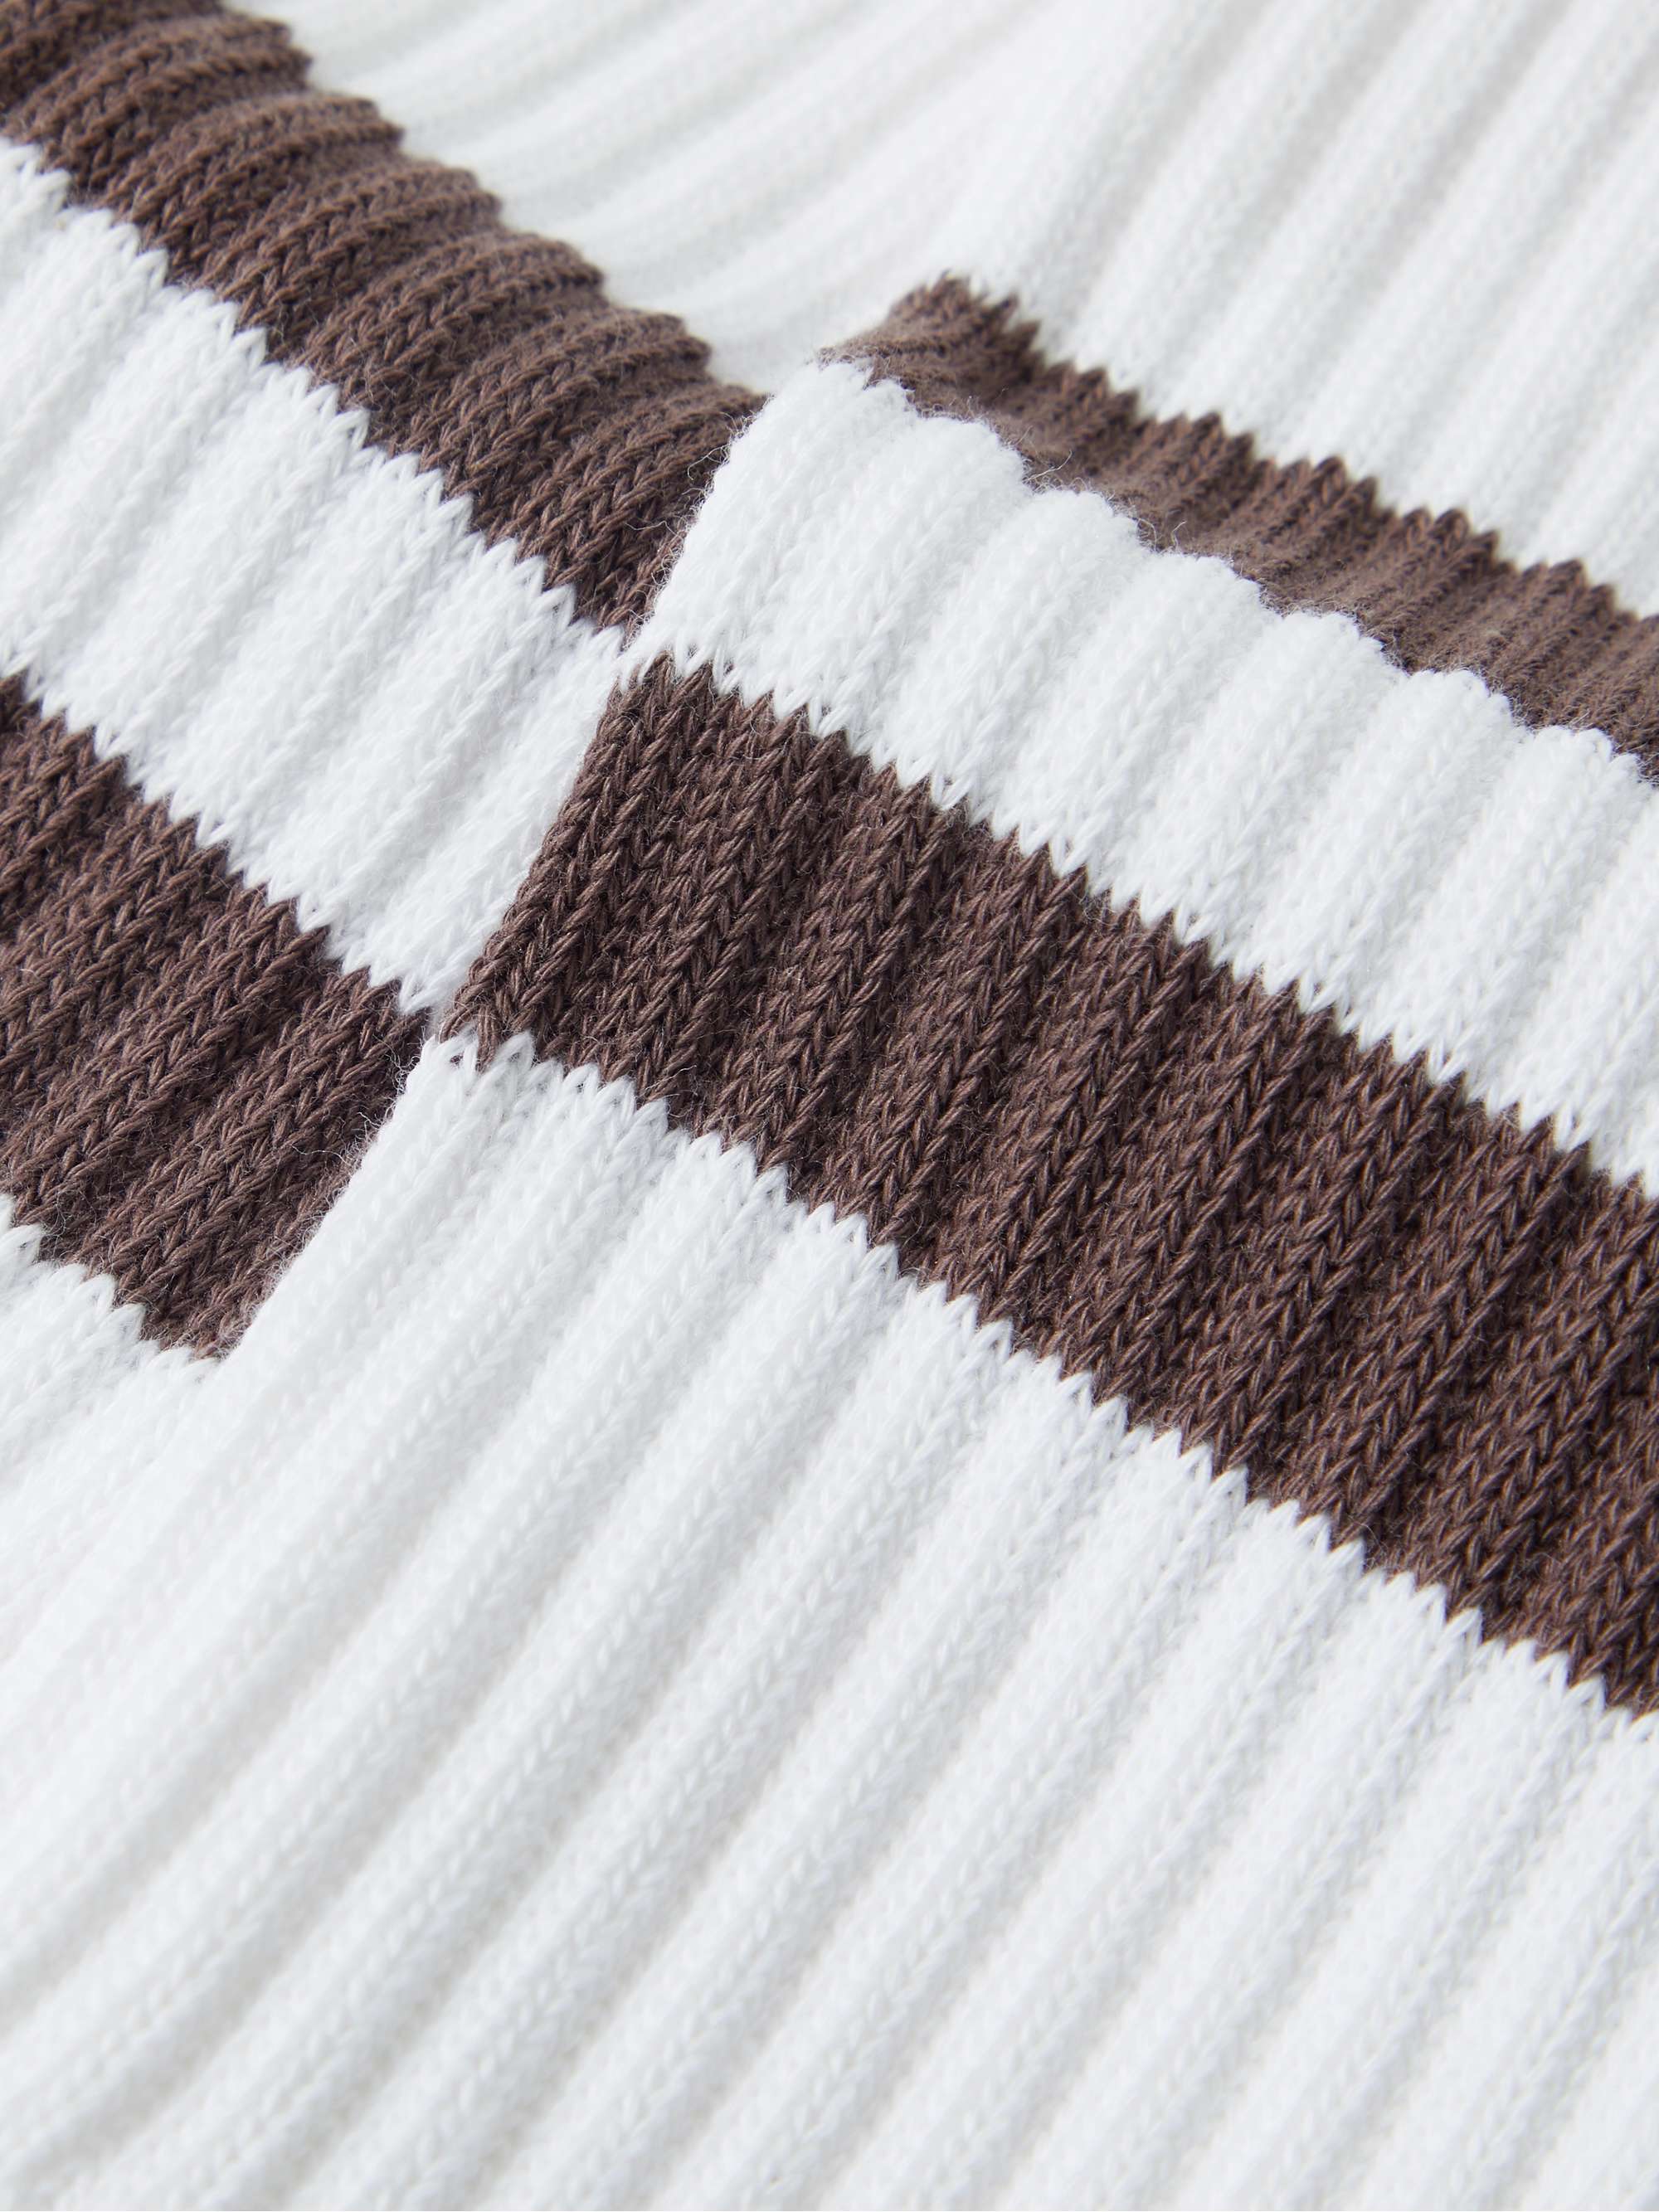 NORSE PROJECTS Bjarki Striped Ribbed Cotton-Blend Socks